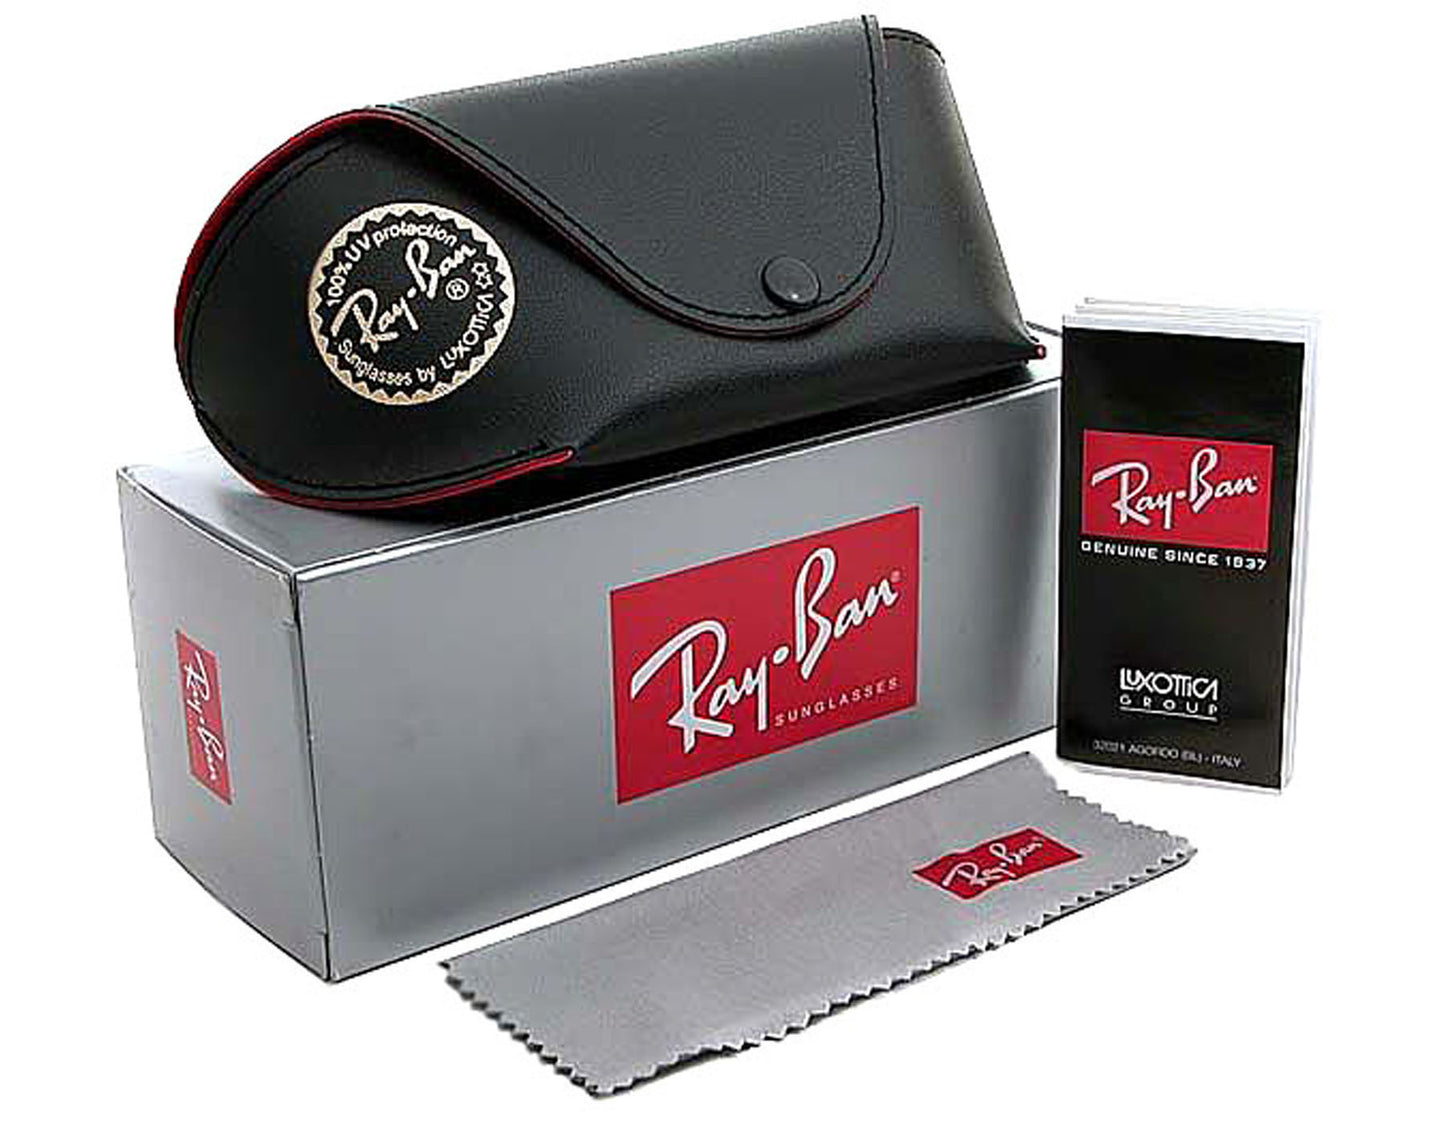 Ray Ban RB4395-667771-54  New Sunglasses